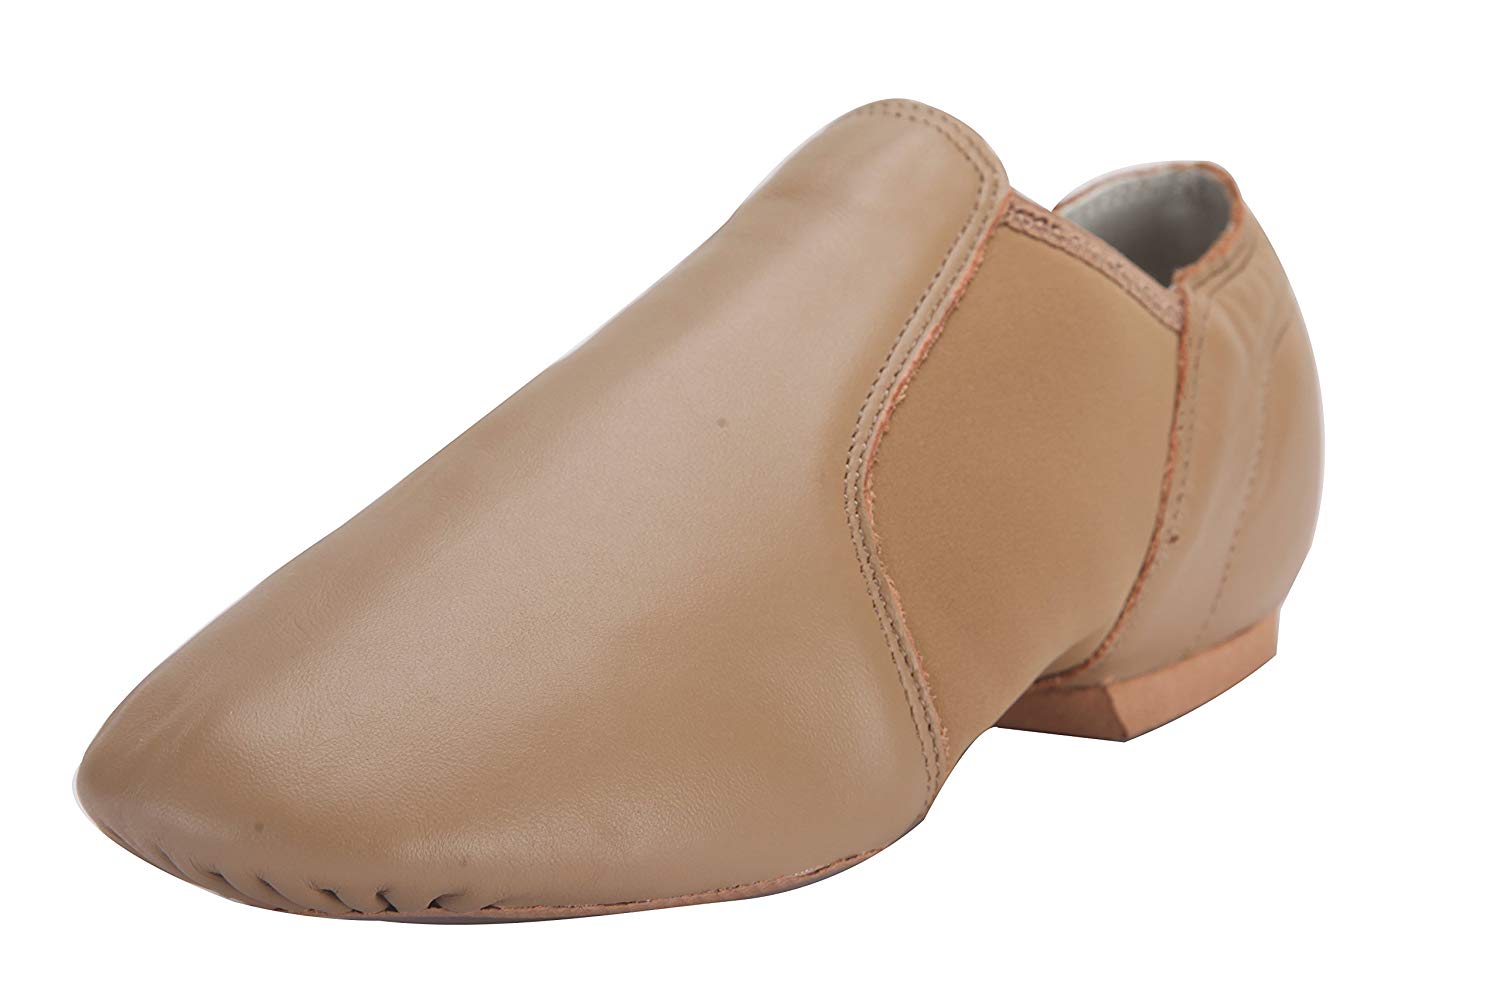 Toddler/Little Kid/Big Kid Linodes Leather Jazz Shoe Slip On for Girls and Boys 